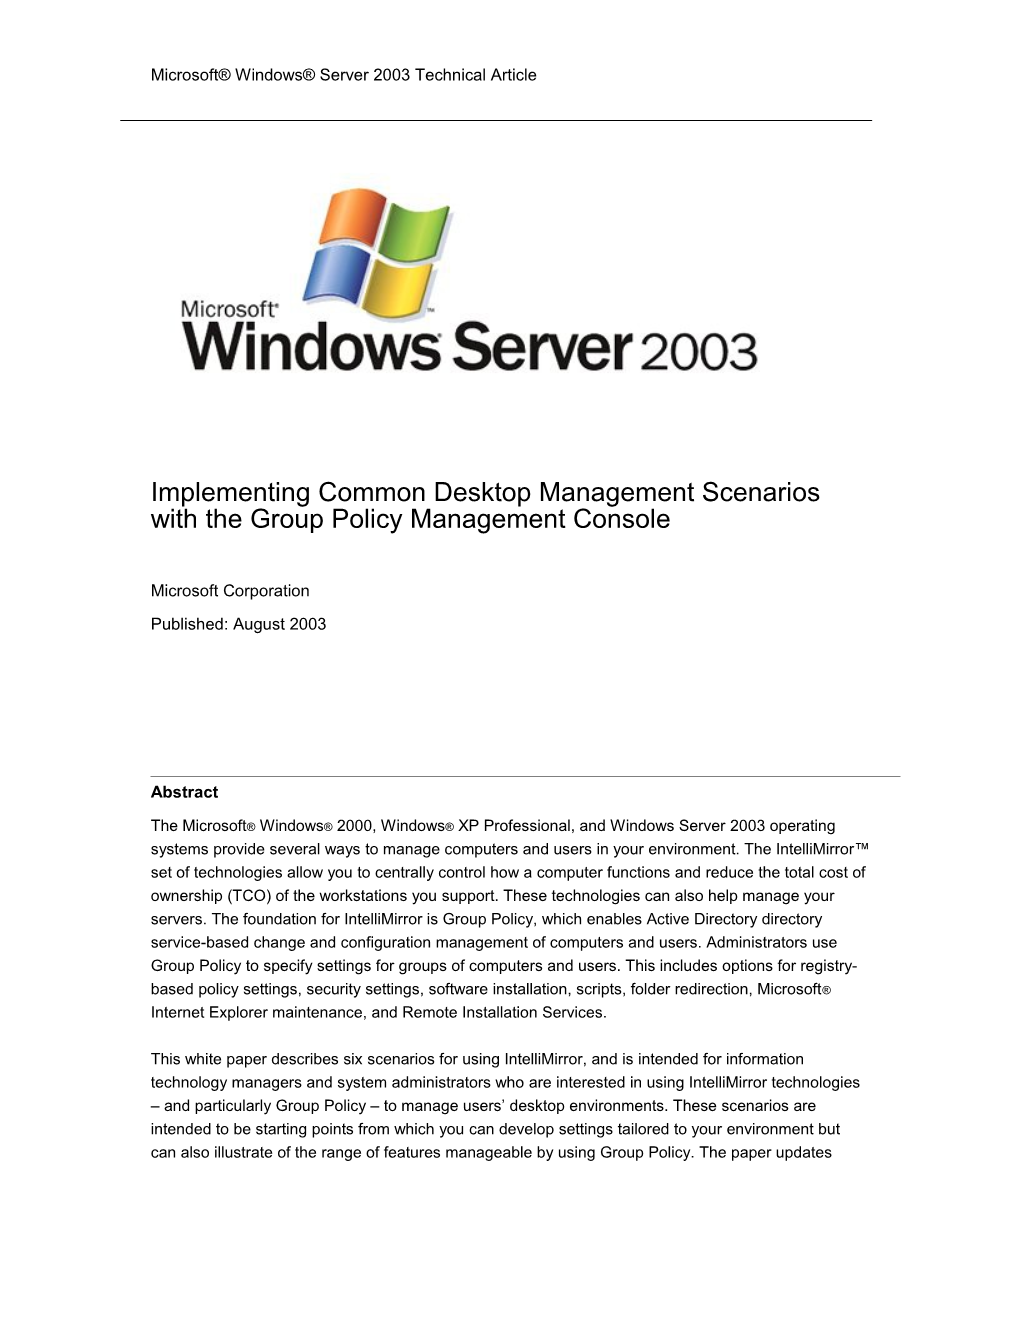 Microsoft Windows Server 2003 Technical Article